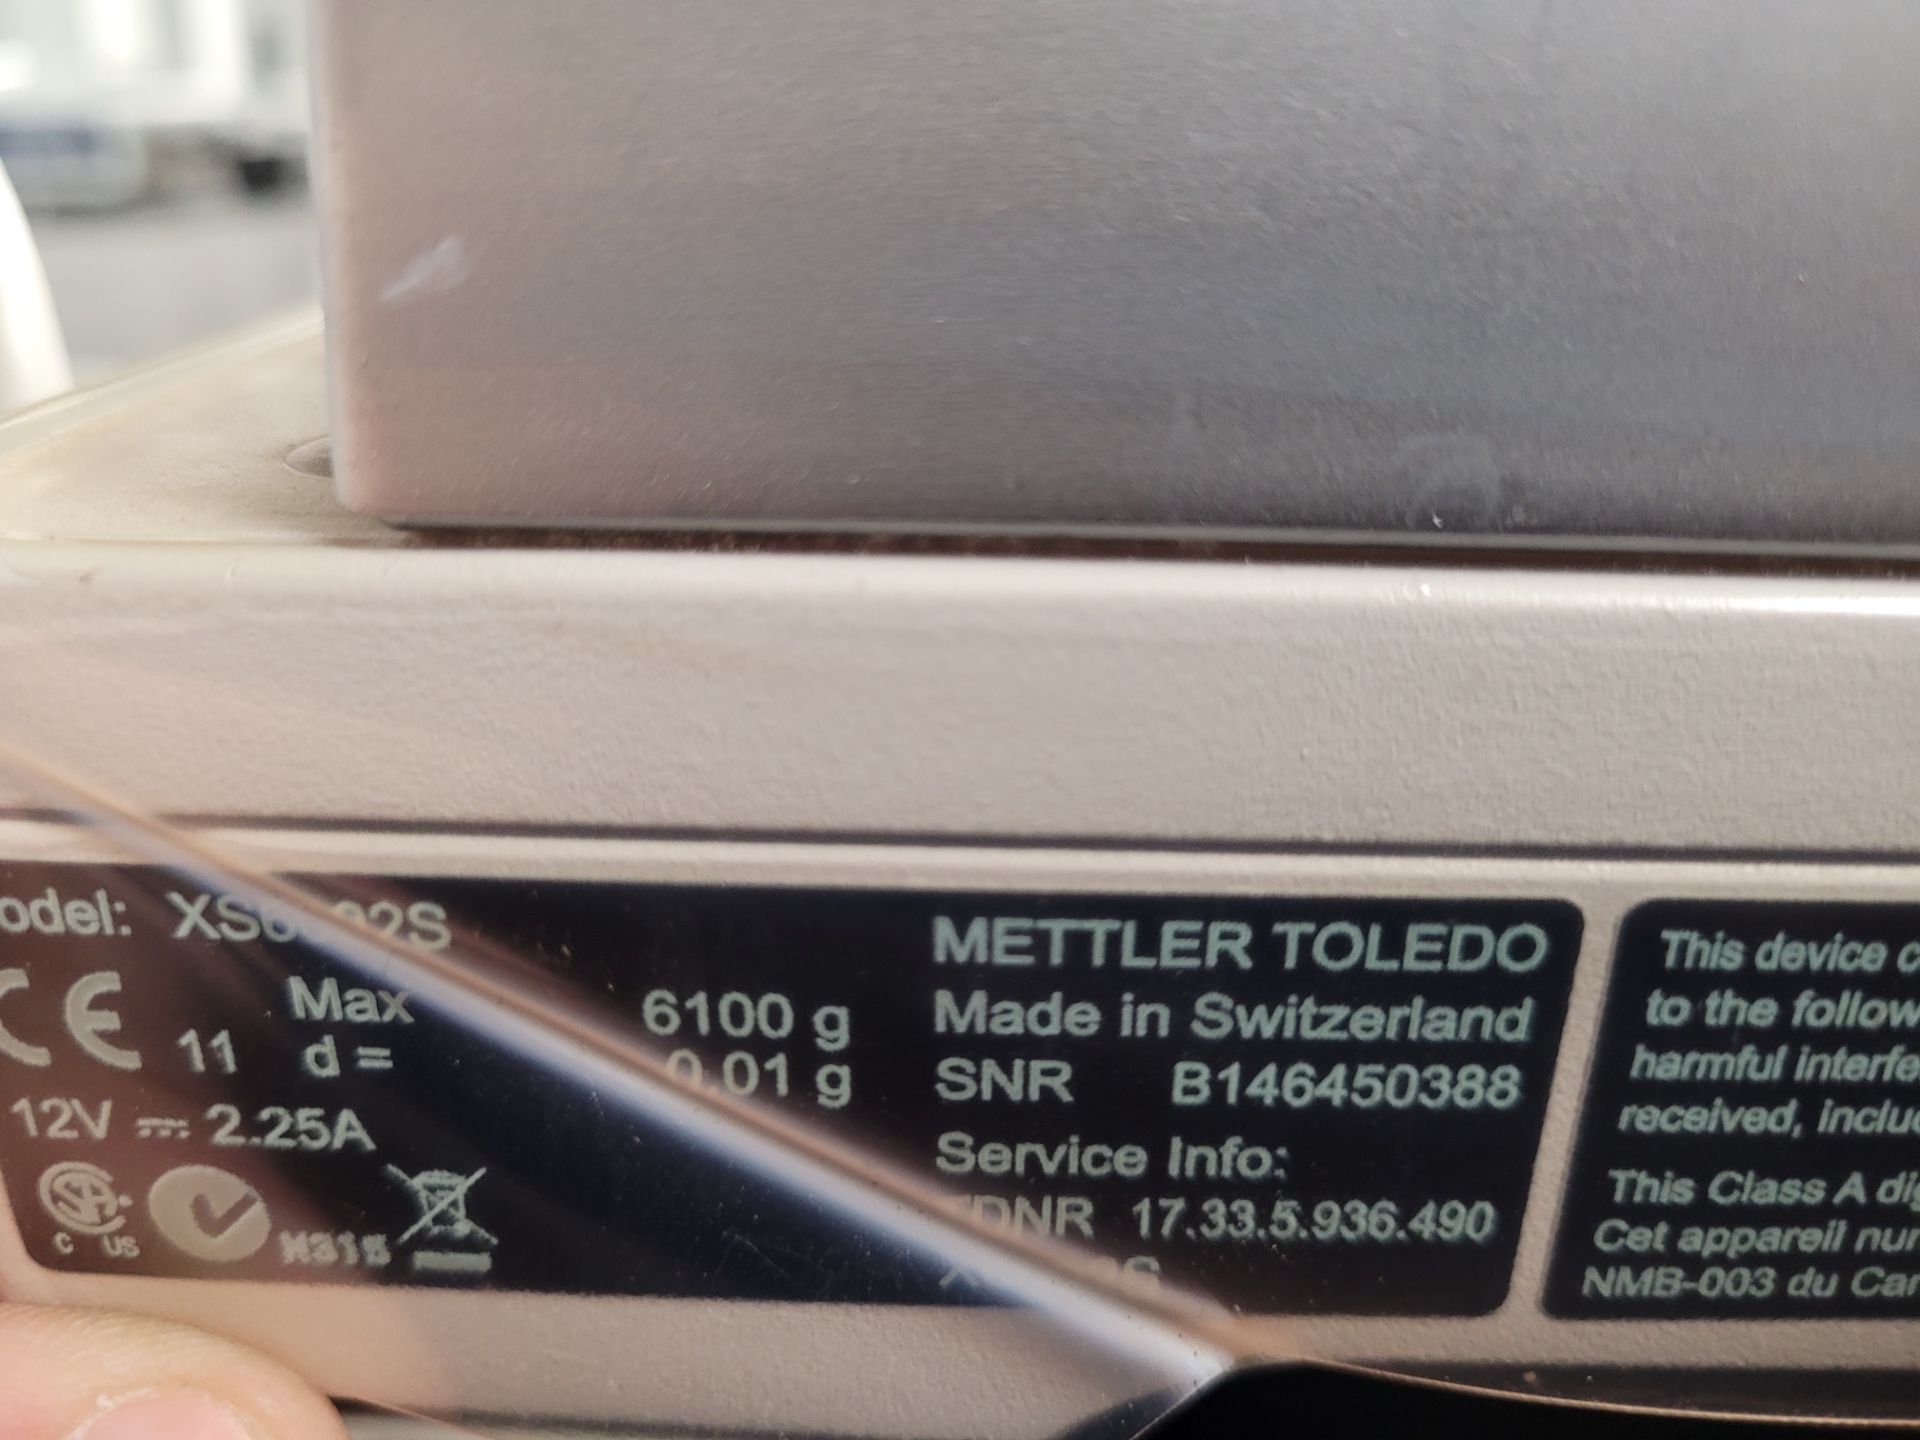 METTLER-TOLEDO mod. XS6002S Smartpan precision balance, 6100g cap., 0.01g, ser. B146450388 - Image 4 of 6